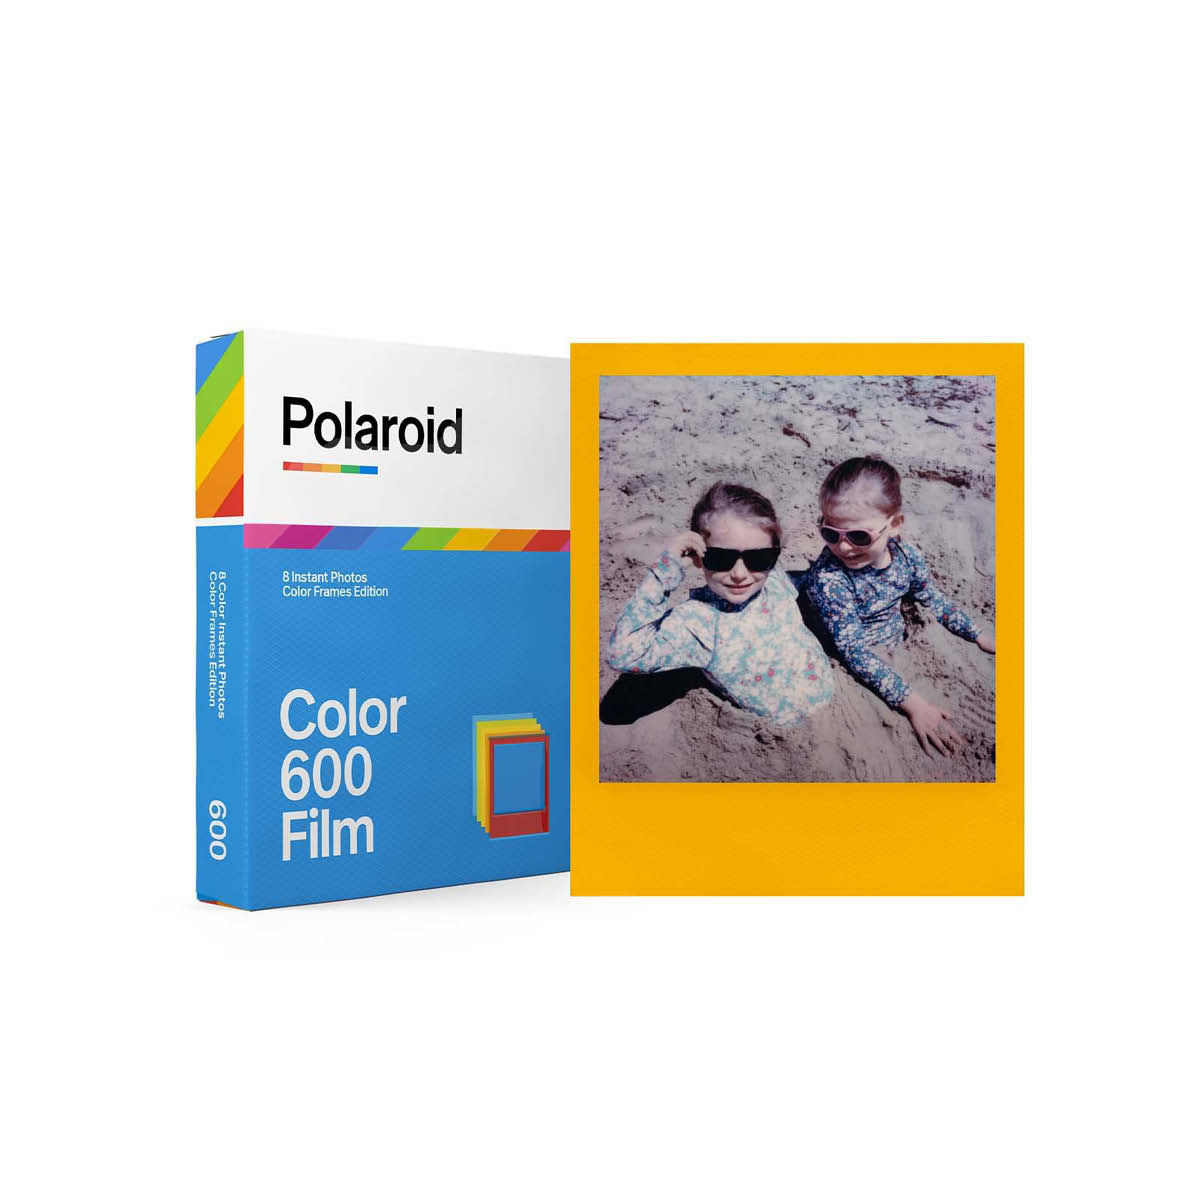 Polaroid 600 Color Film Color Frames